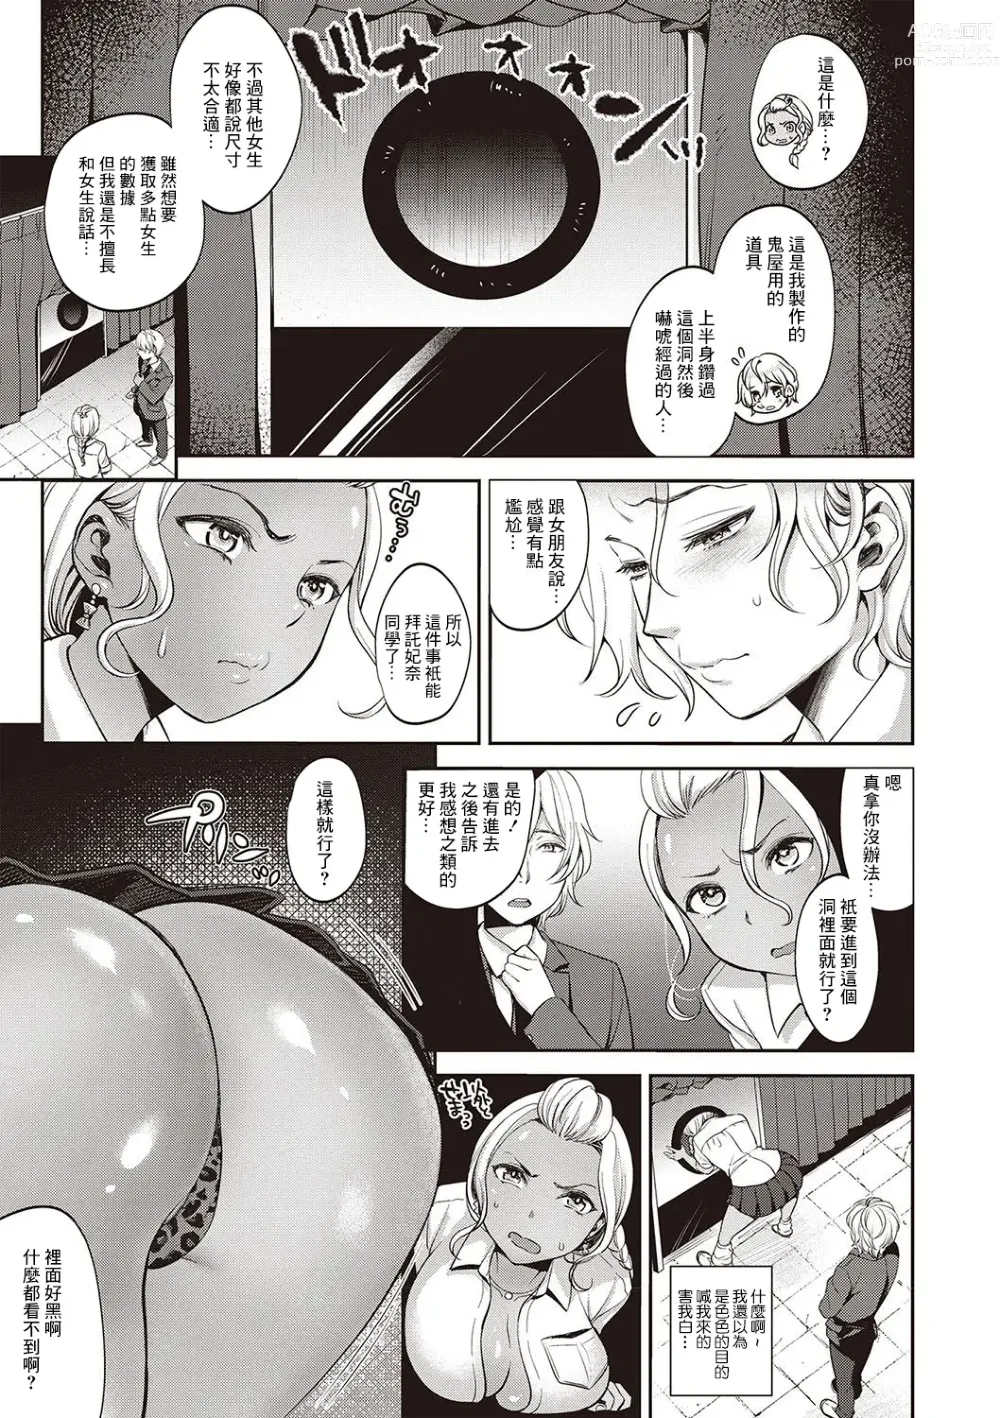 Page 3 of manga Black Hole